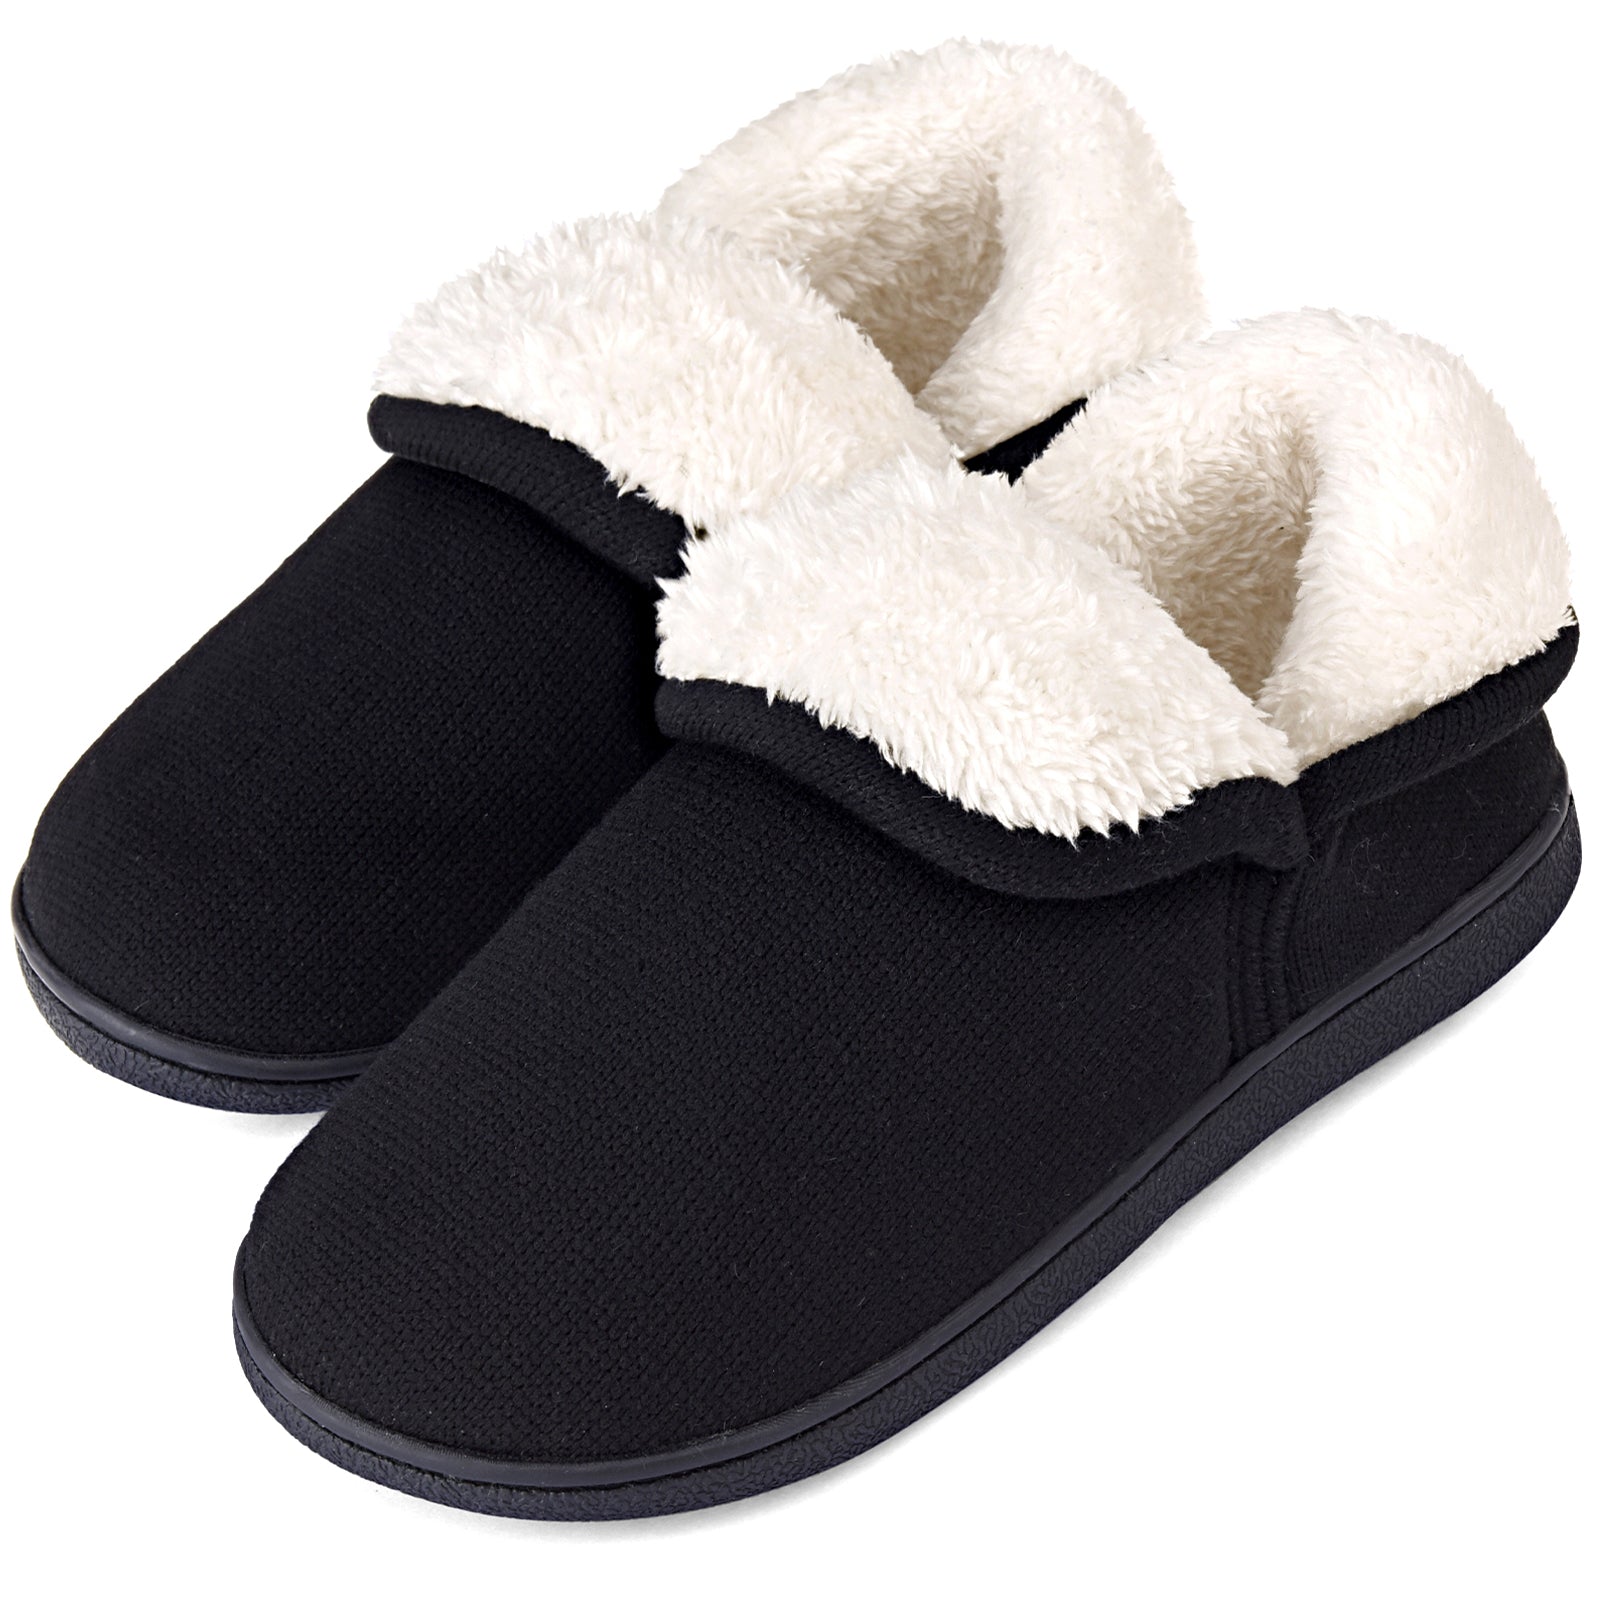 fuzzy slippers black